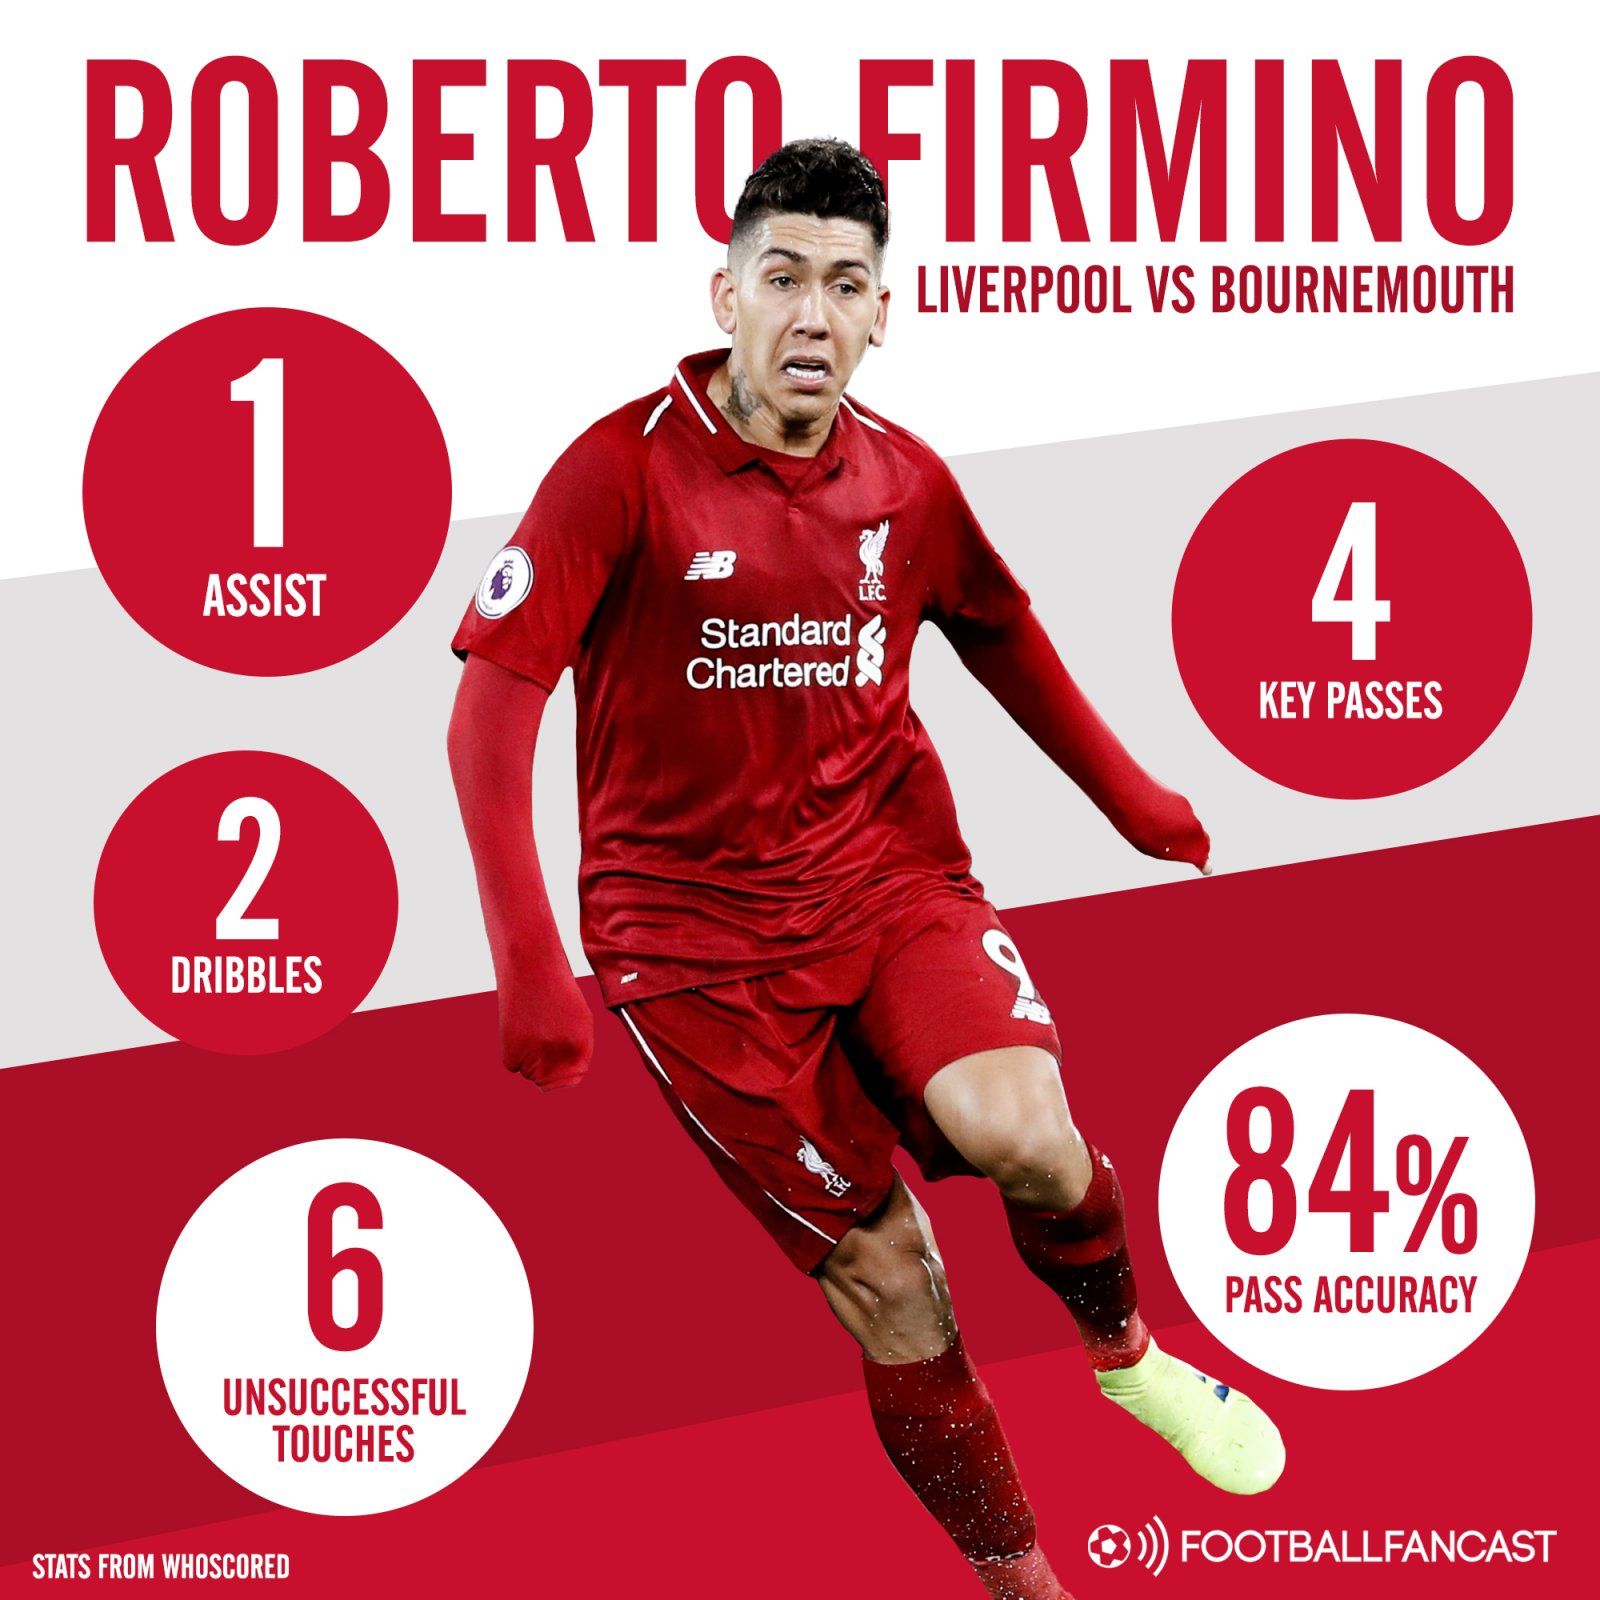 Roberto Firmino stats vs Bournemouth